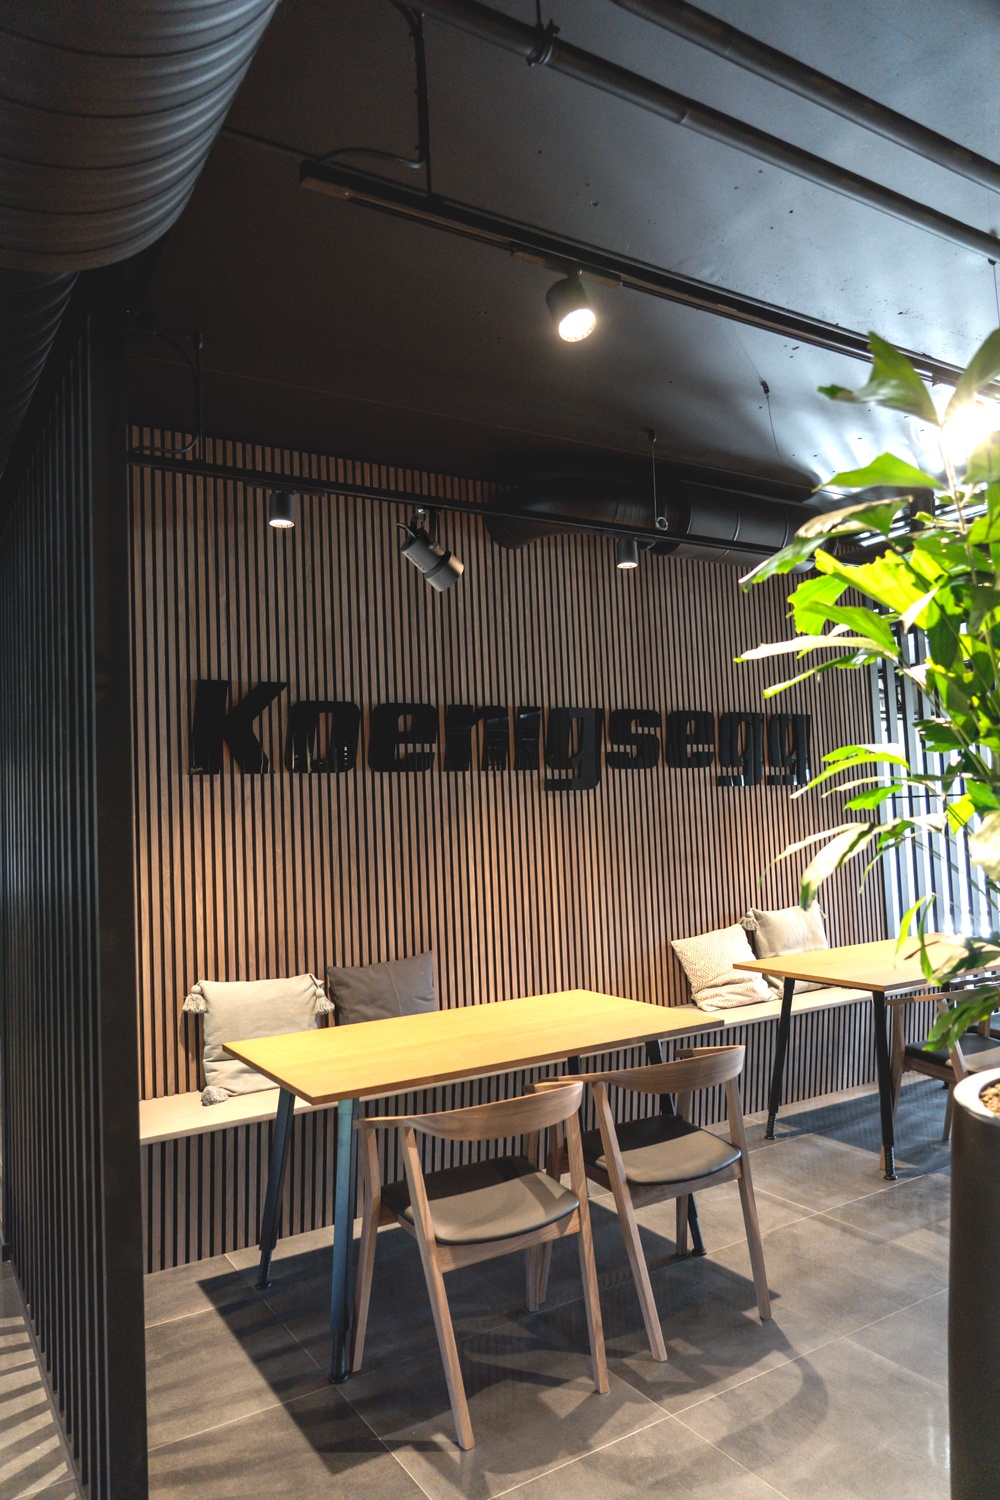 Audio Pro Business - Koenigsegg